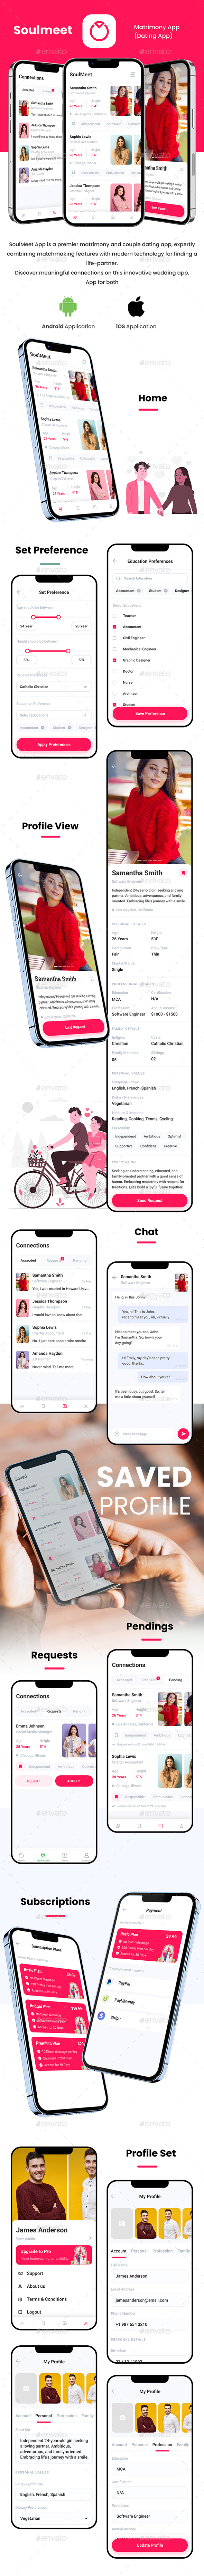 Online Dating App UI Kit | Matrimony App UI Kit | Chatting & Dating App UI | SoulMeet